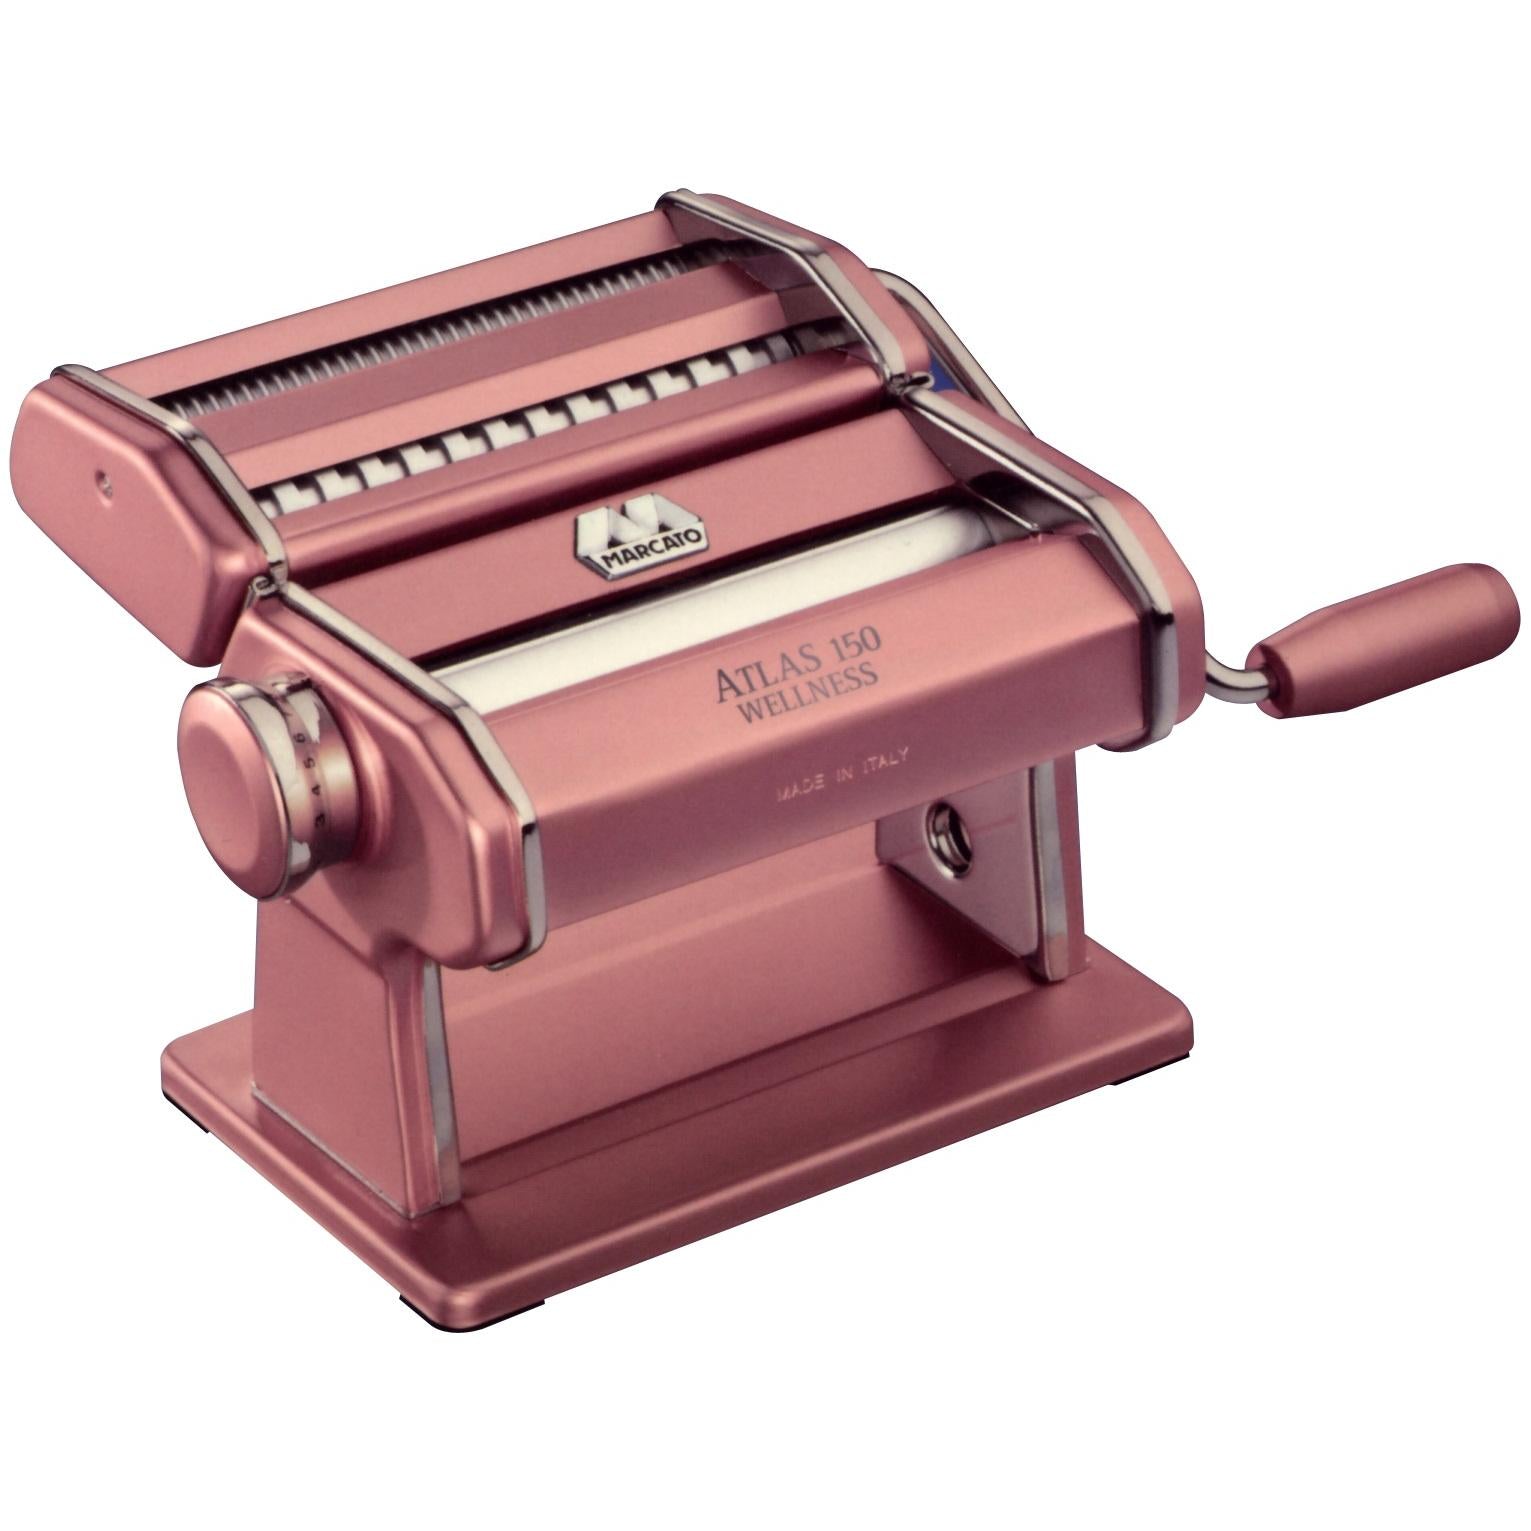 Copper Marcato Atlas 150 Pasta Machine - q.b. cucina in 2023